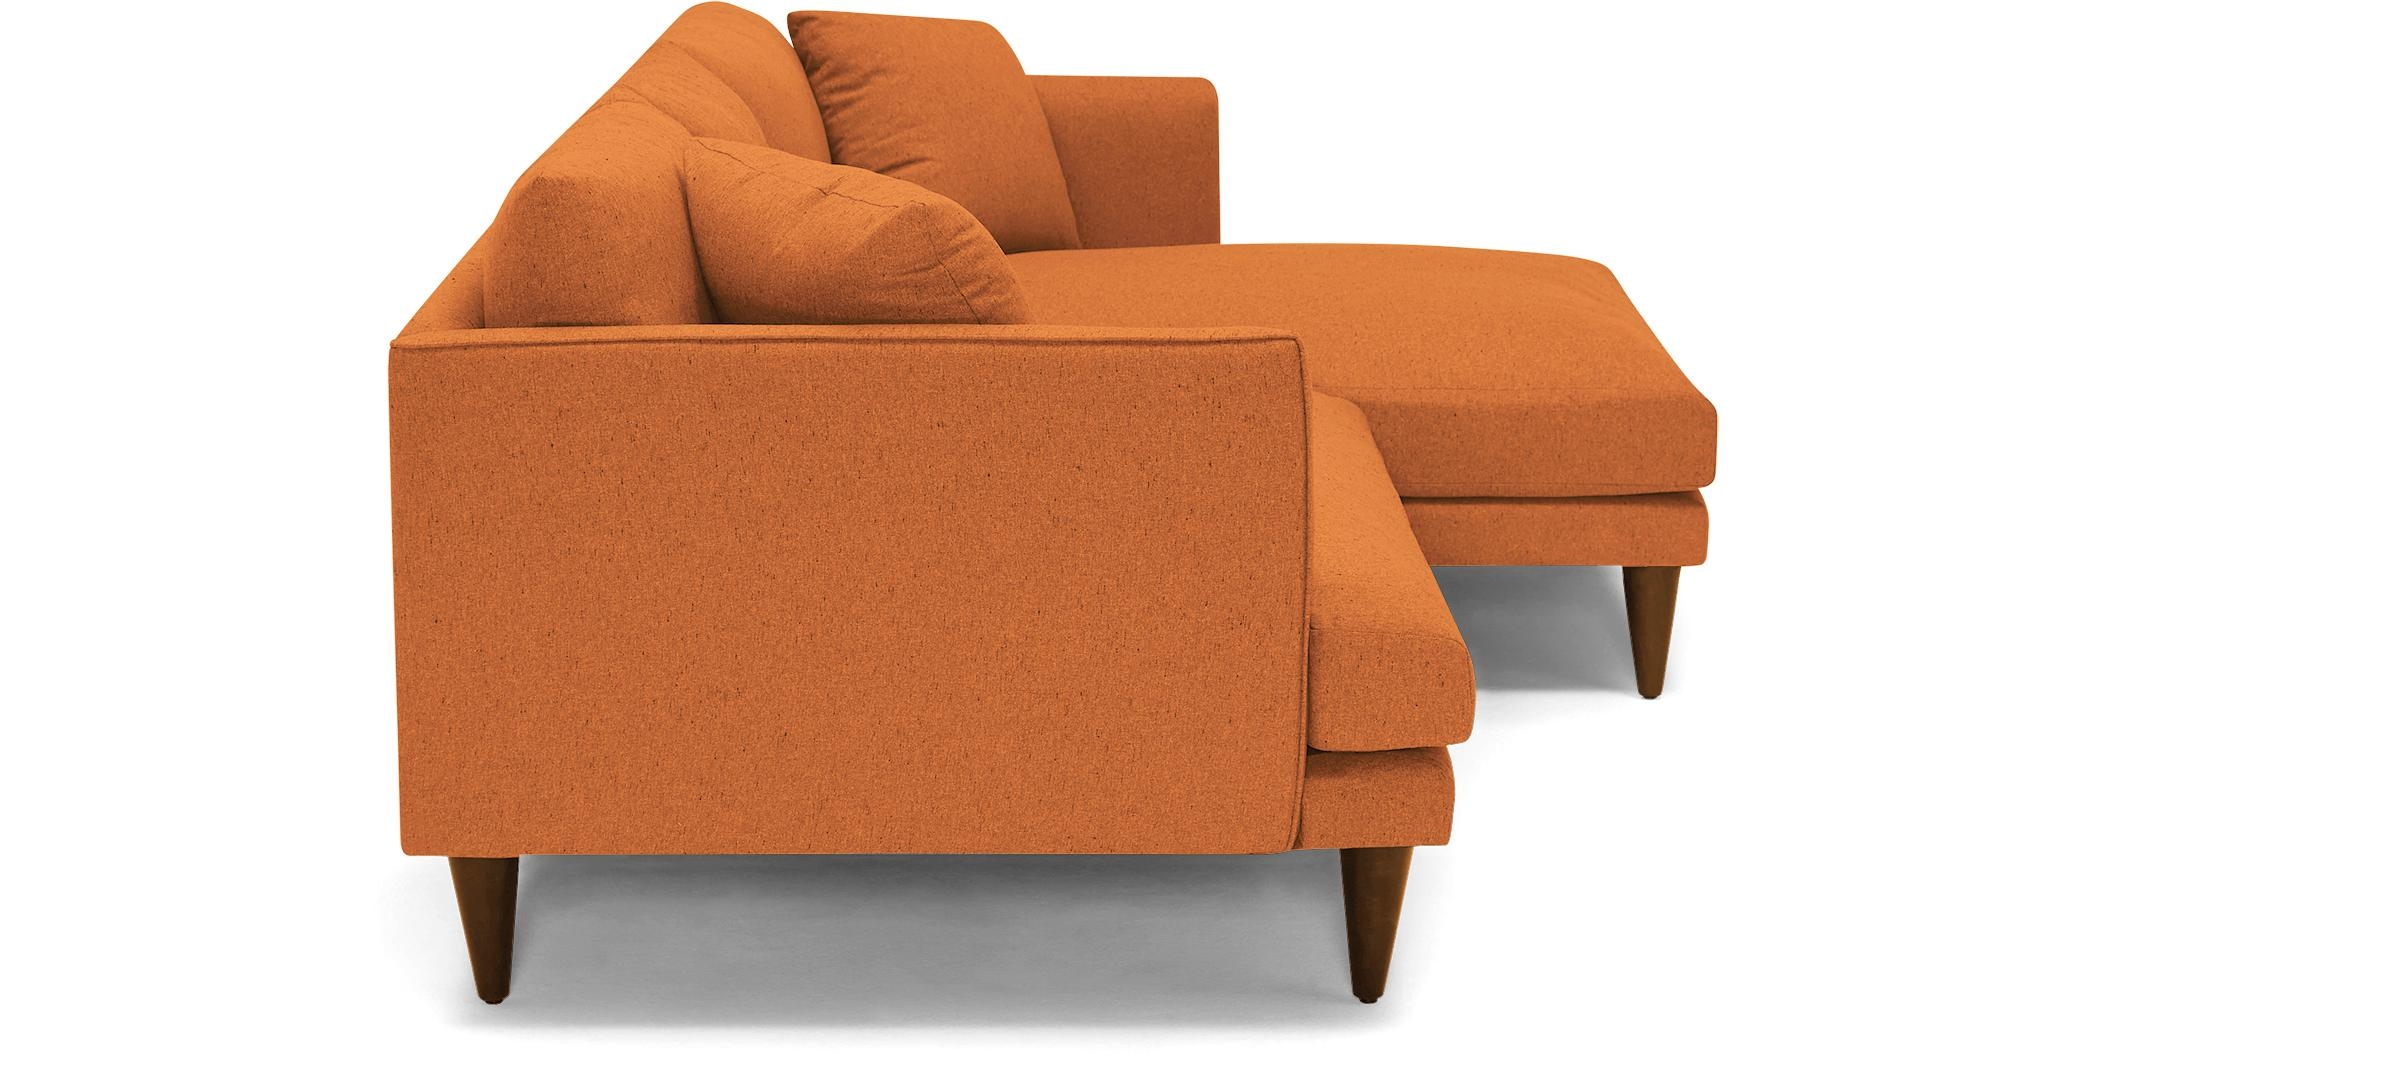 Orange Lewis Mid Century Modern Sectional - Vibe Sunkist - Mocha - Right - Cone - Image 2